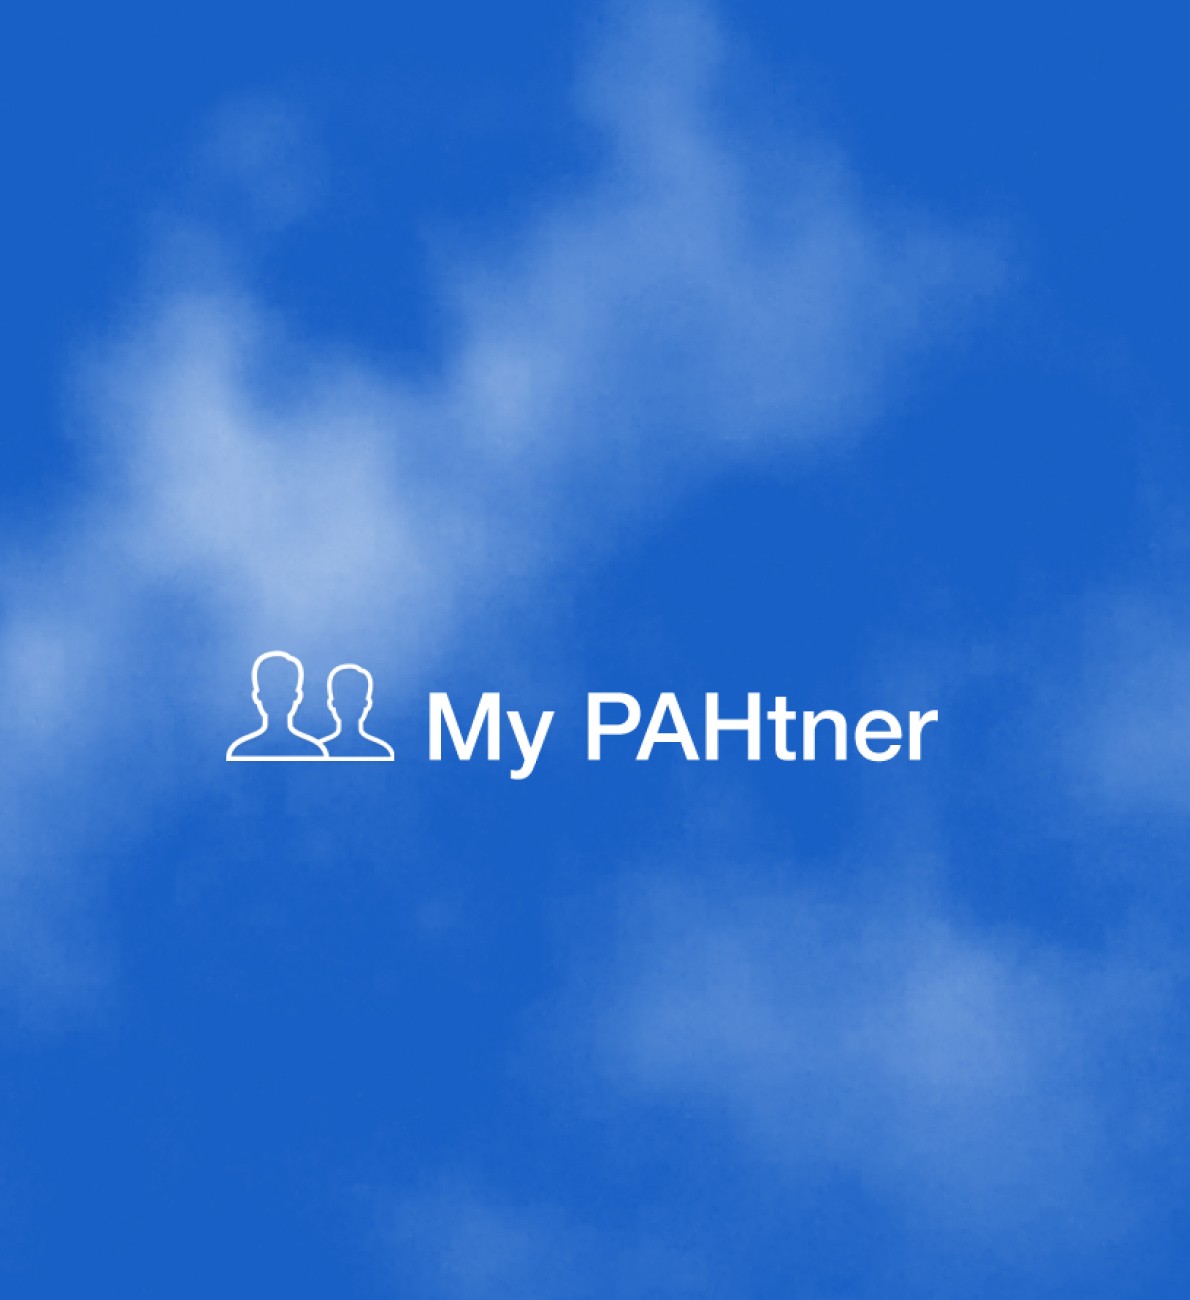 Work_My_PaHtner_leader